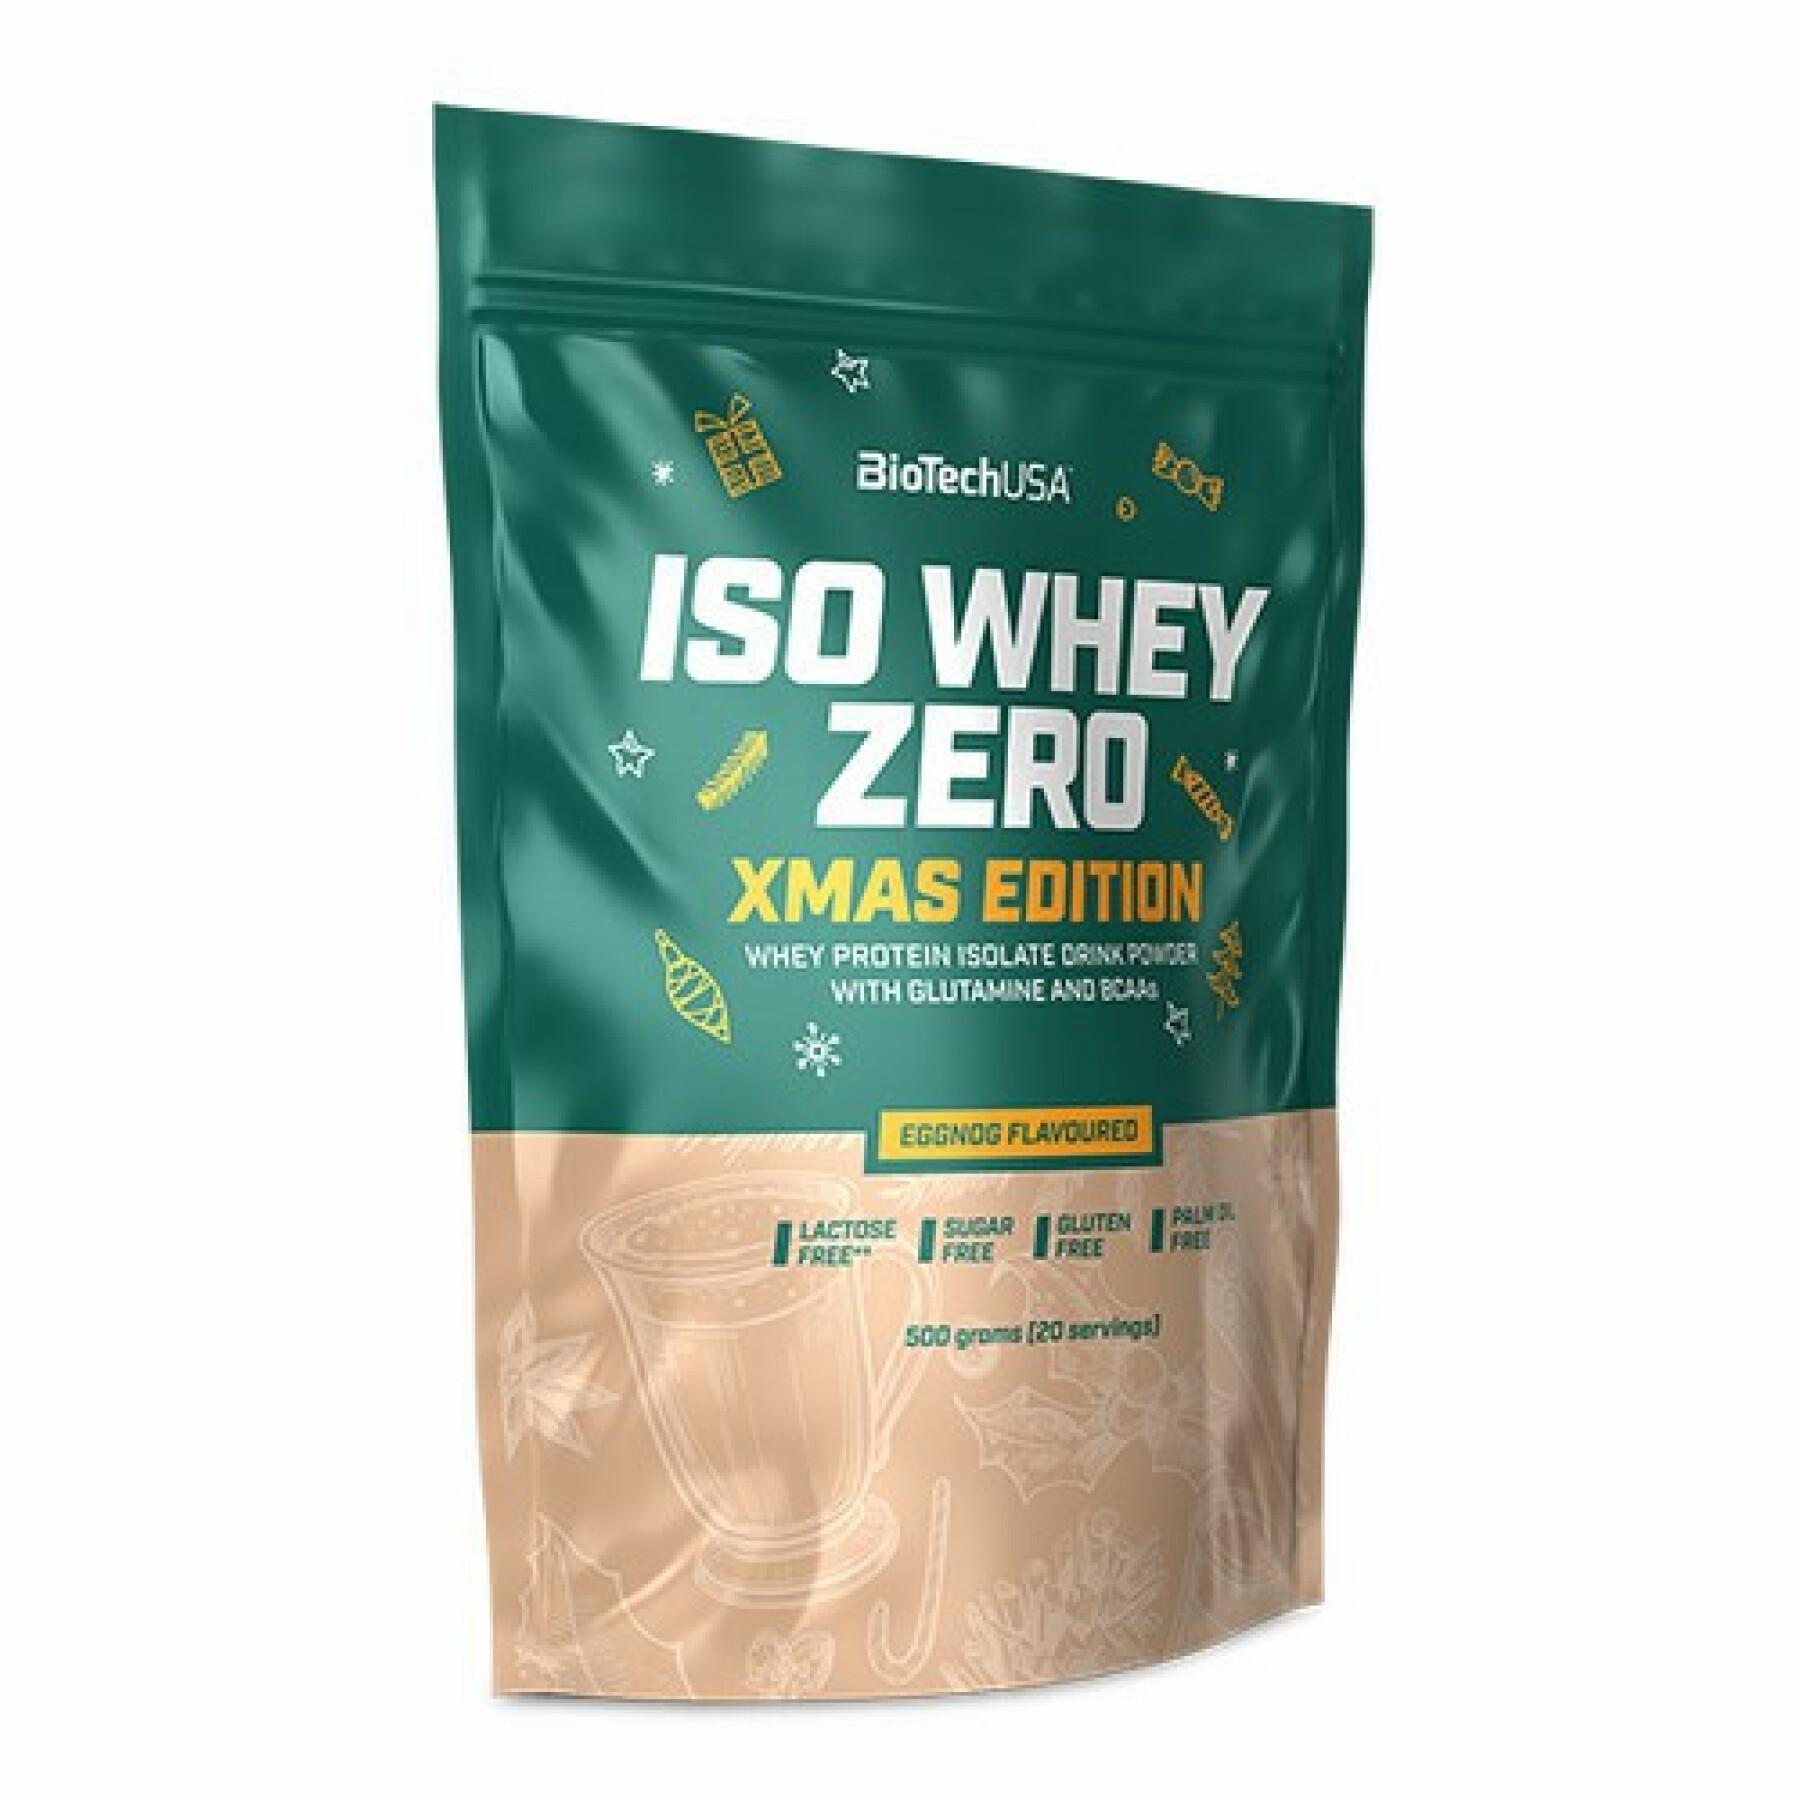 Pak van 10 zakjes proteïne Biotech USA iso whey zero lactose free - Popcorn - 500g